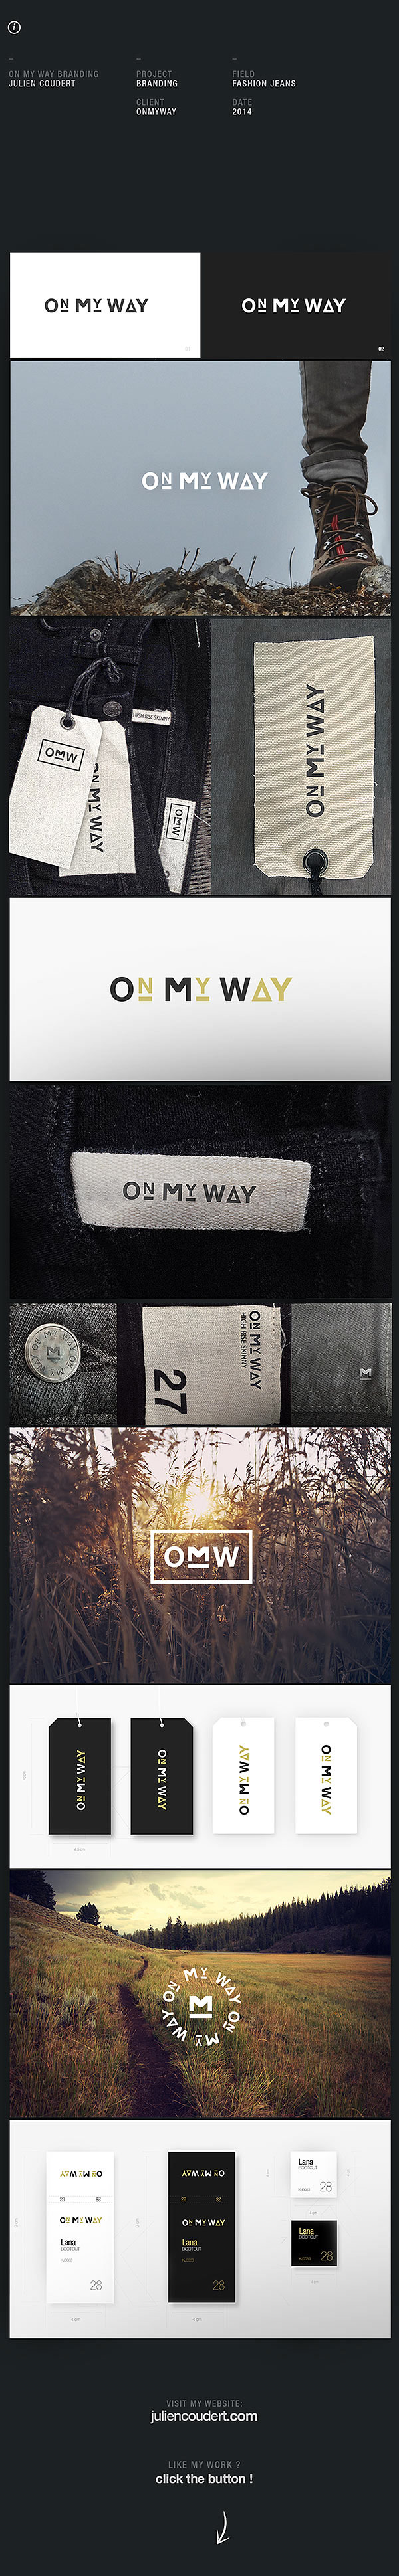 jeans clean modern White dark grey button Label price tag clothes photos